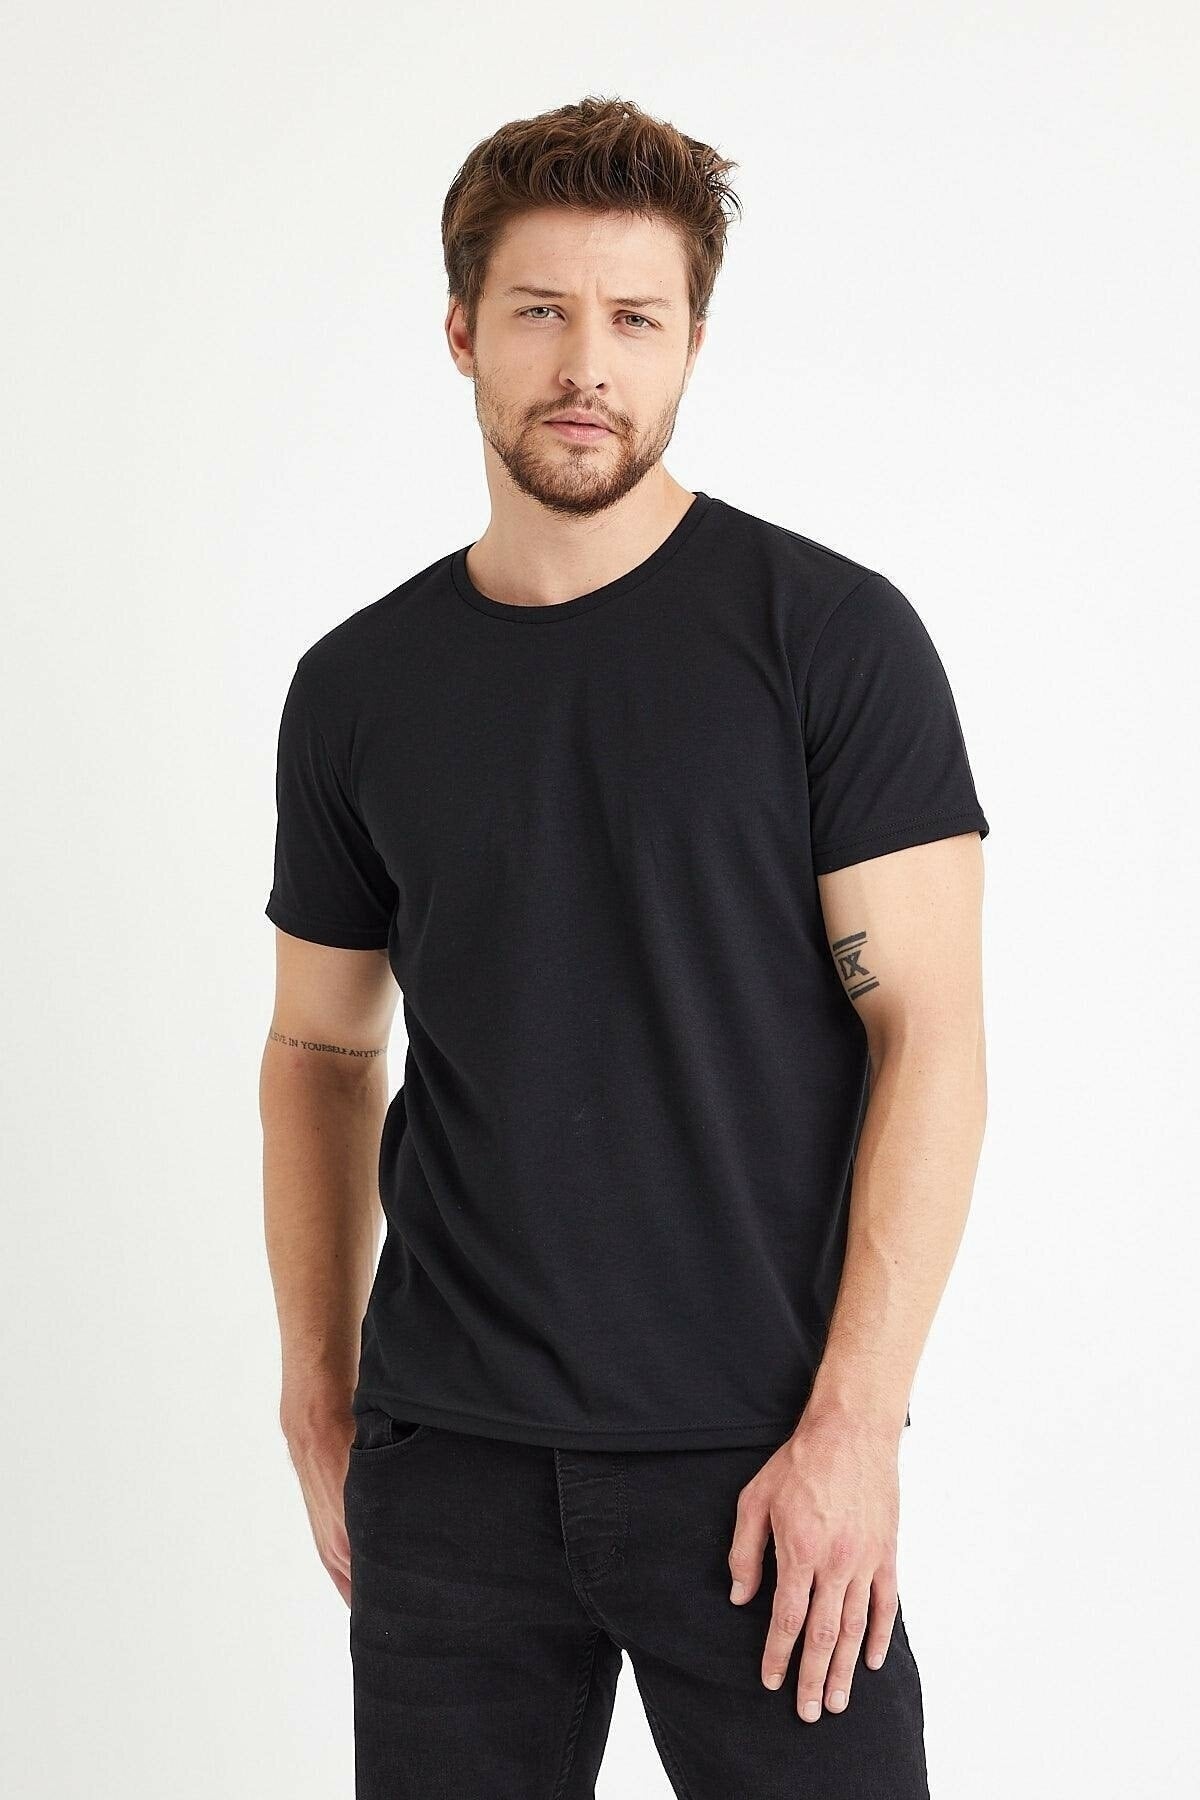 Men's Black Crew Neck Short Sleeve Cotton T-Shirt